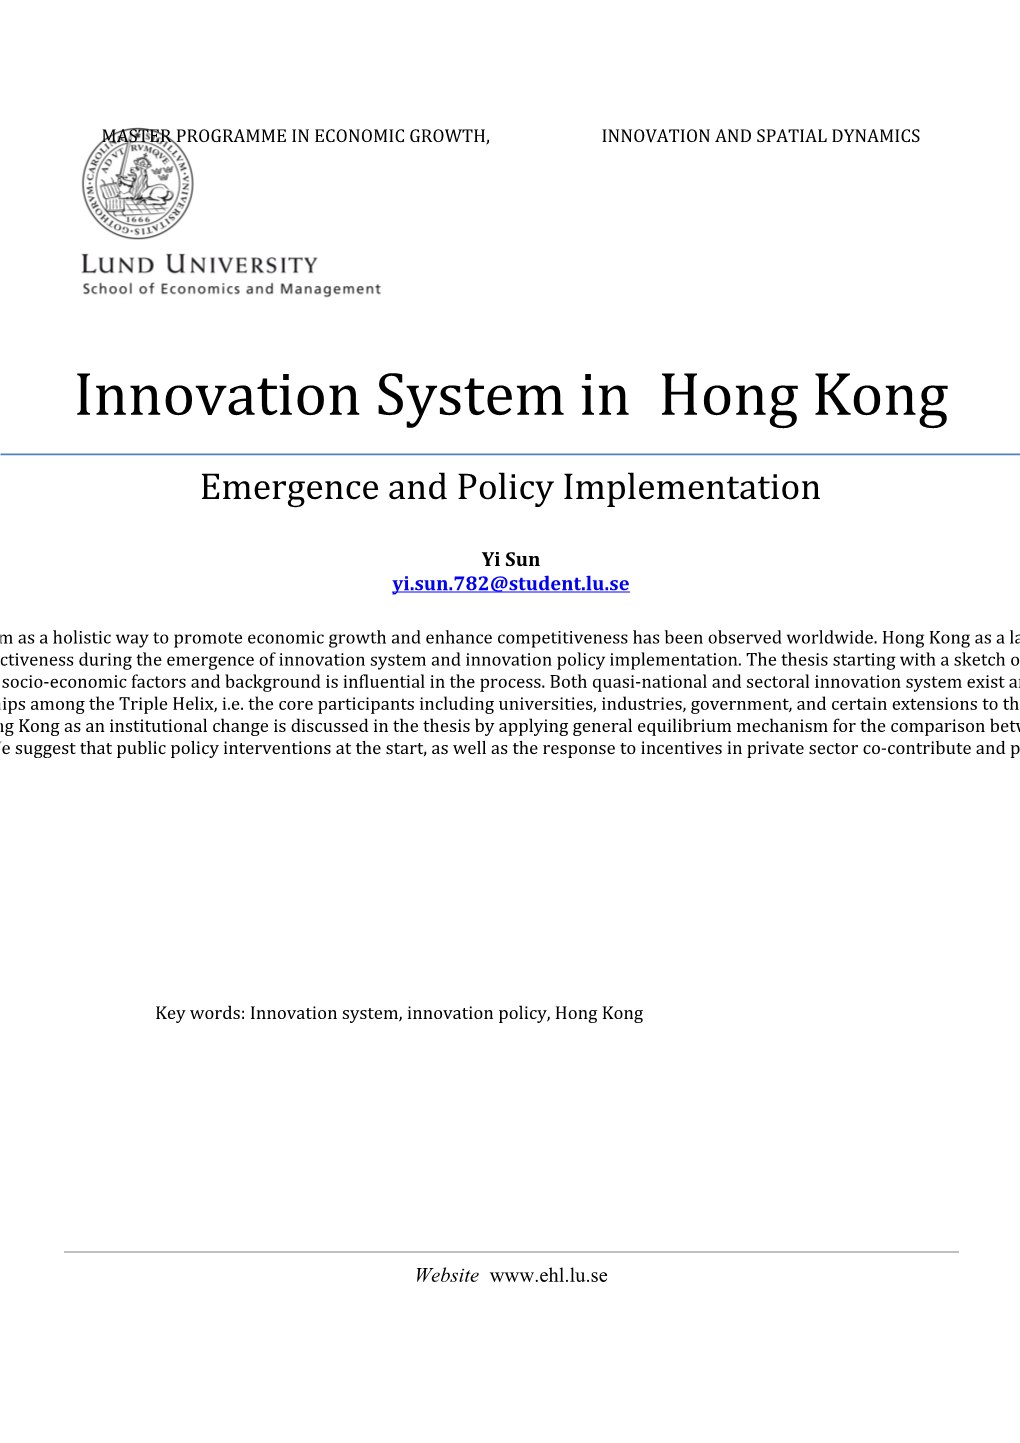 Innovation System in Hong Kong